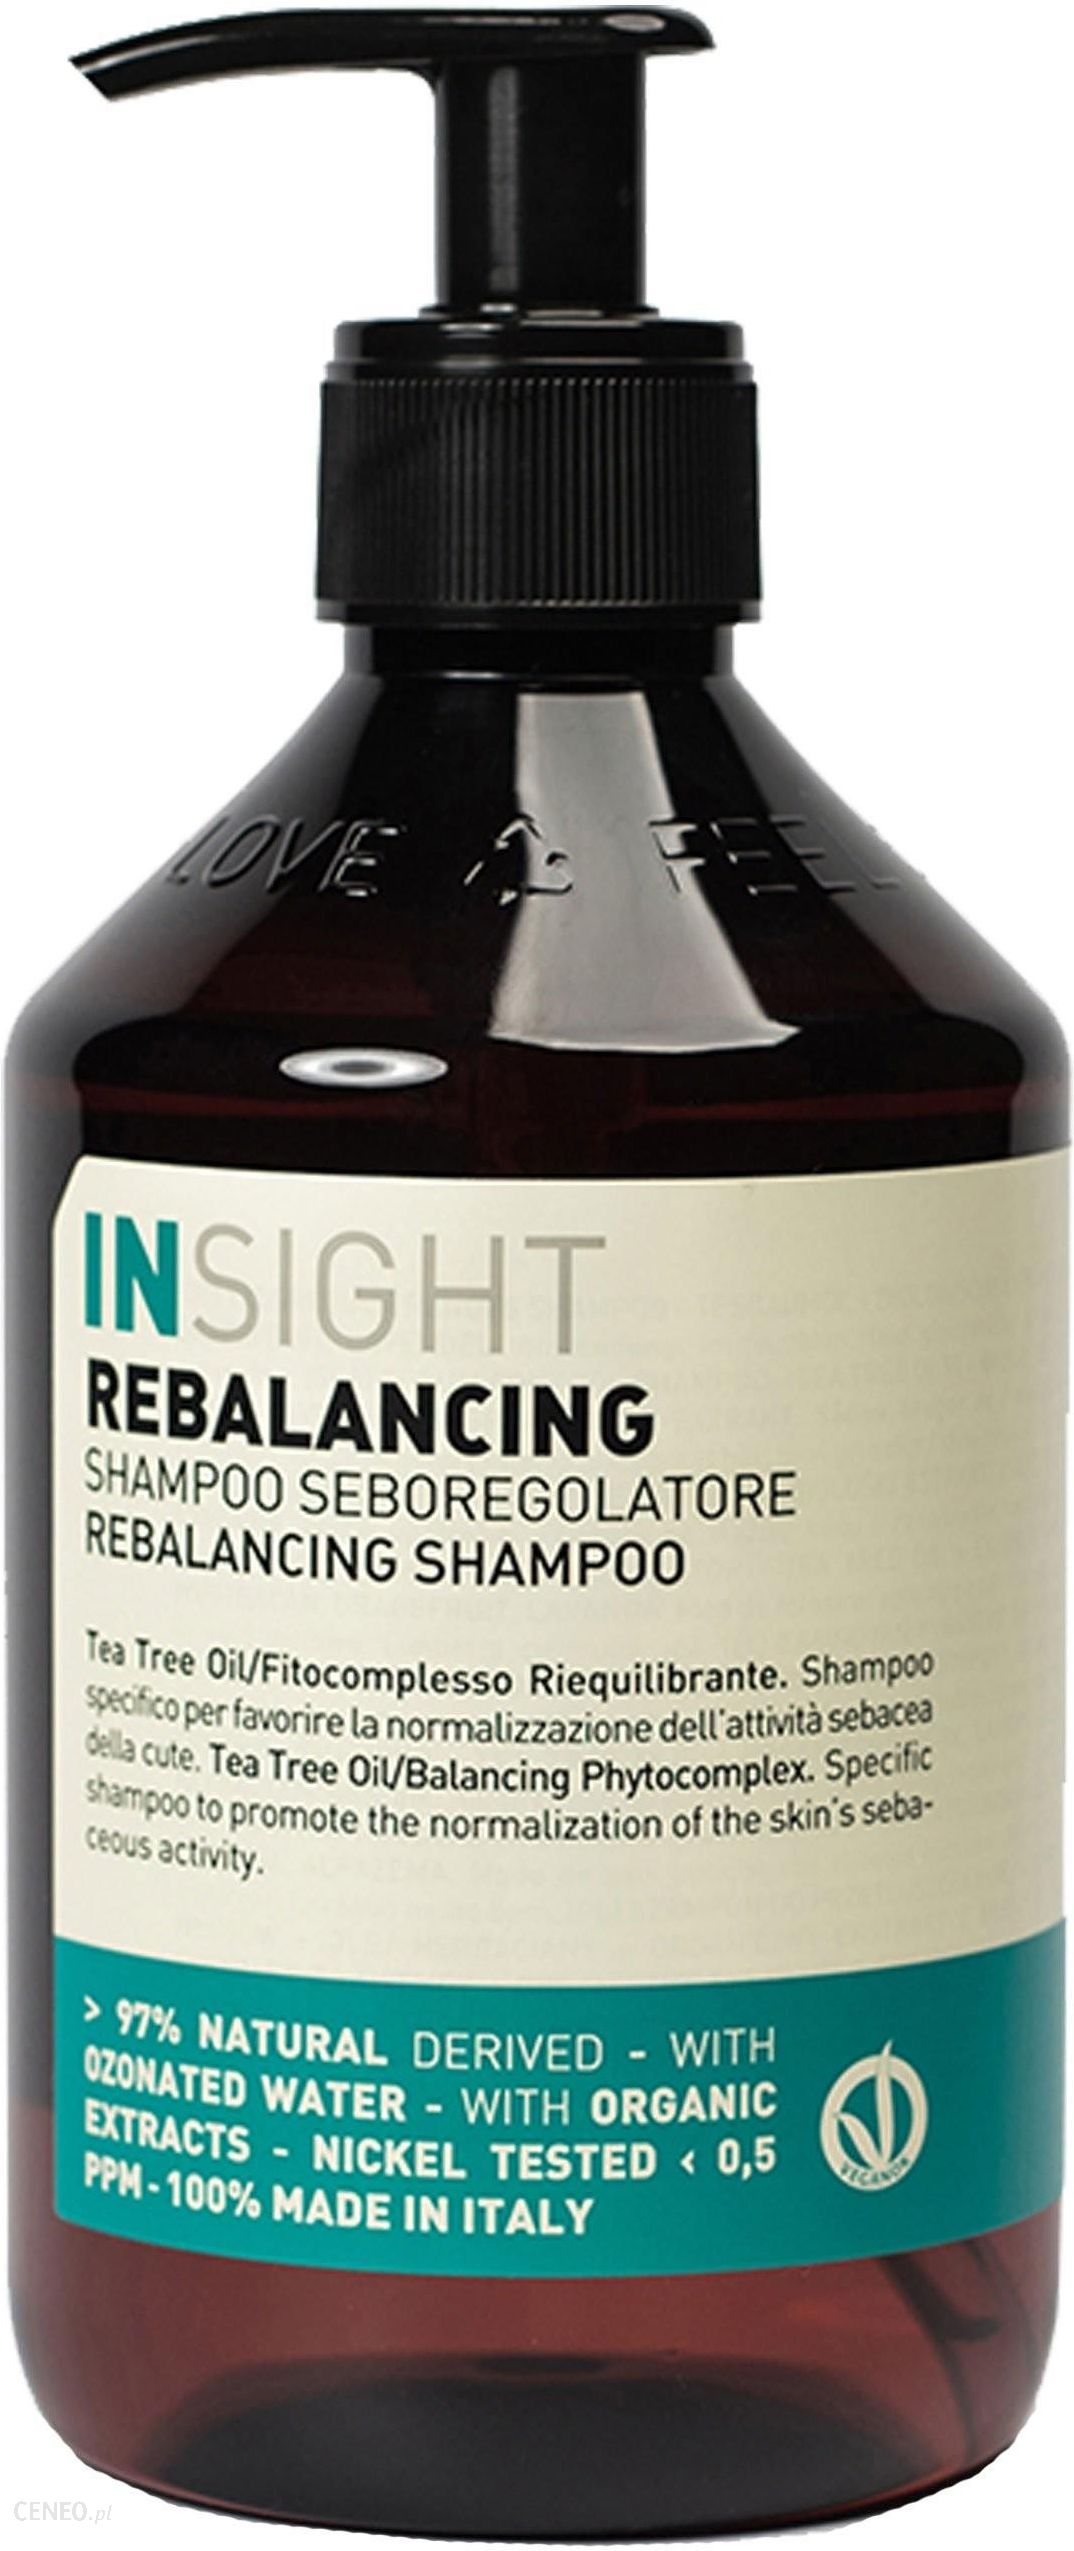 insight rebalancinc szampon 400ml cena